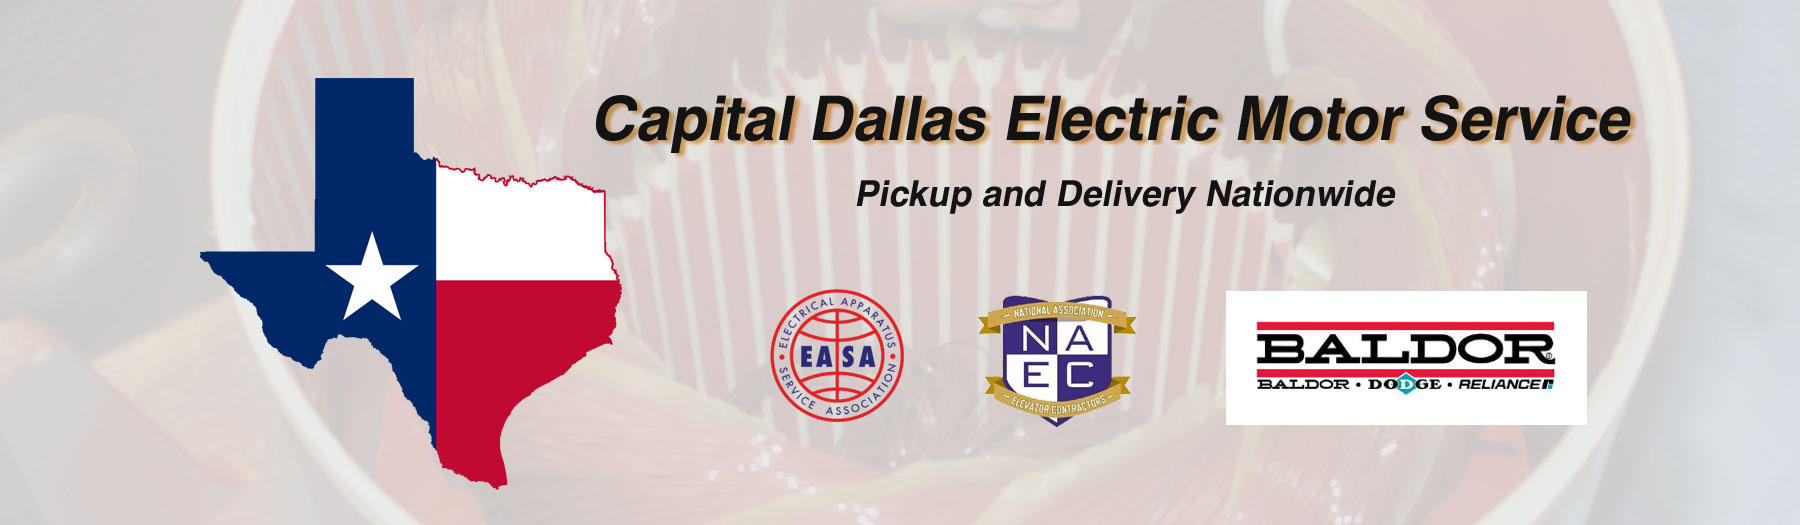 Capital Dallas Electric Motor Service Motor Equipment Repairs